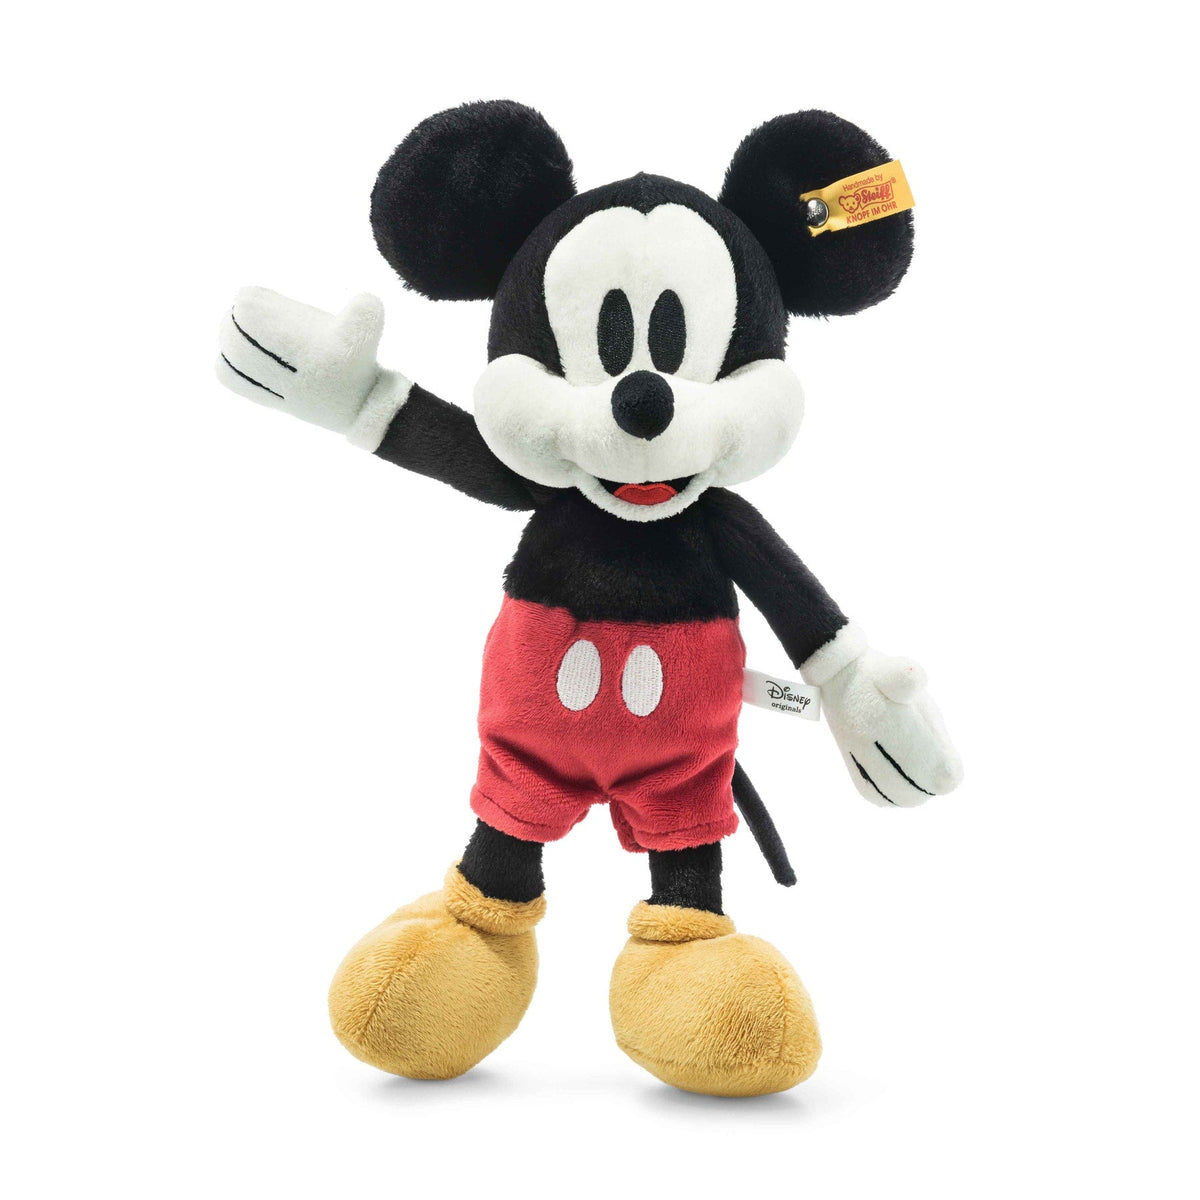 Disney Figurine Ornament - Safari Truck Mickey and Friends